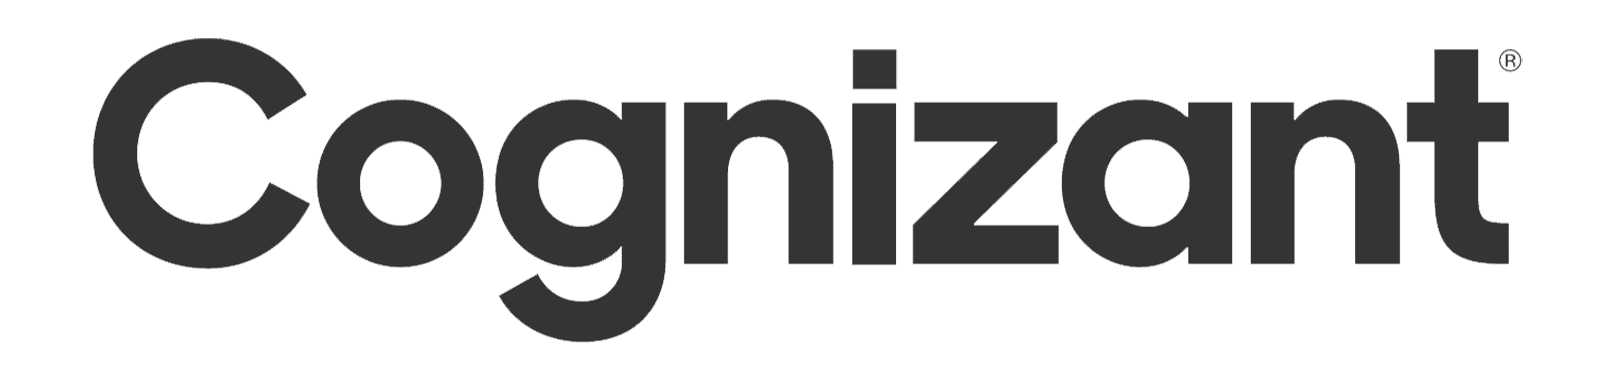 Cognizant logo